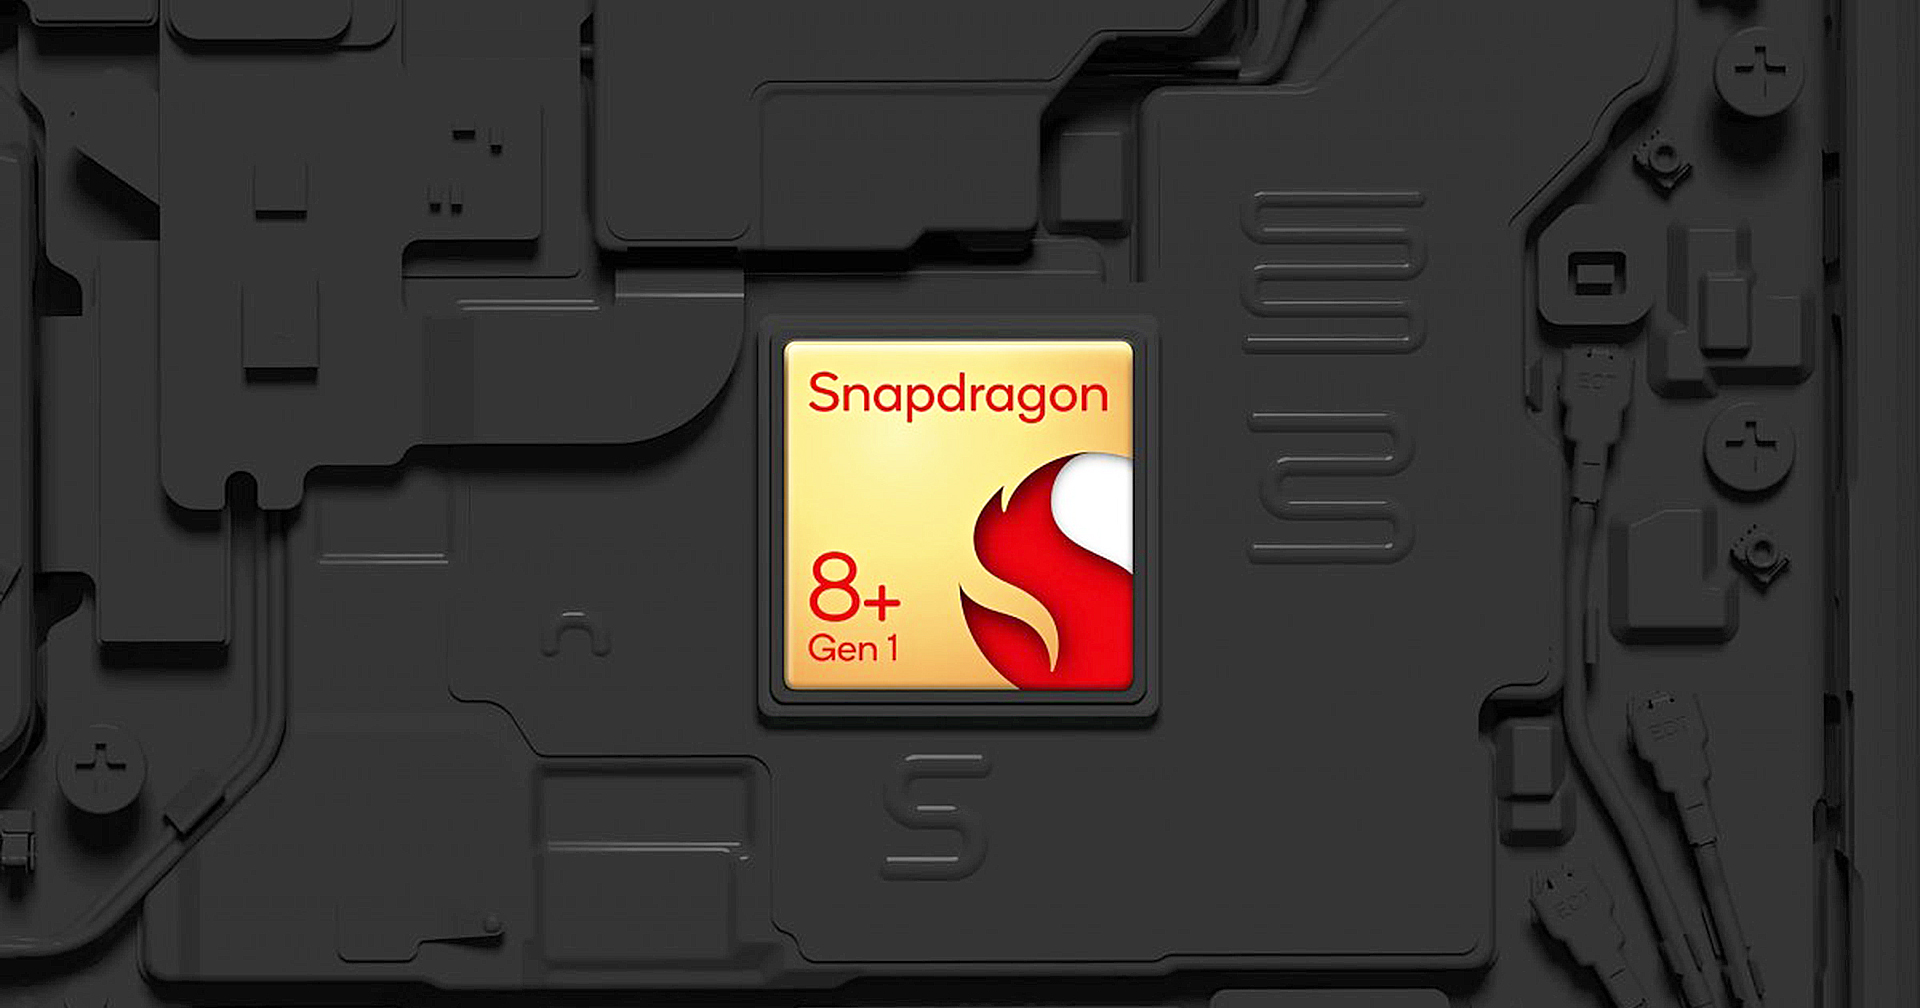 Carl Pei ยืนยัน Nothing Phone (2) จะใช้ขุมพลังระดับพรีเมียม Snapdragon 8+ Gen 1